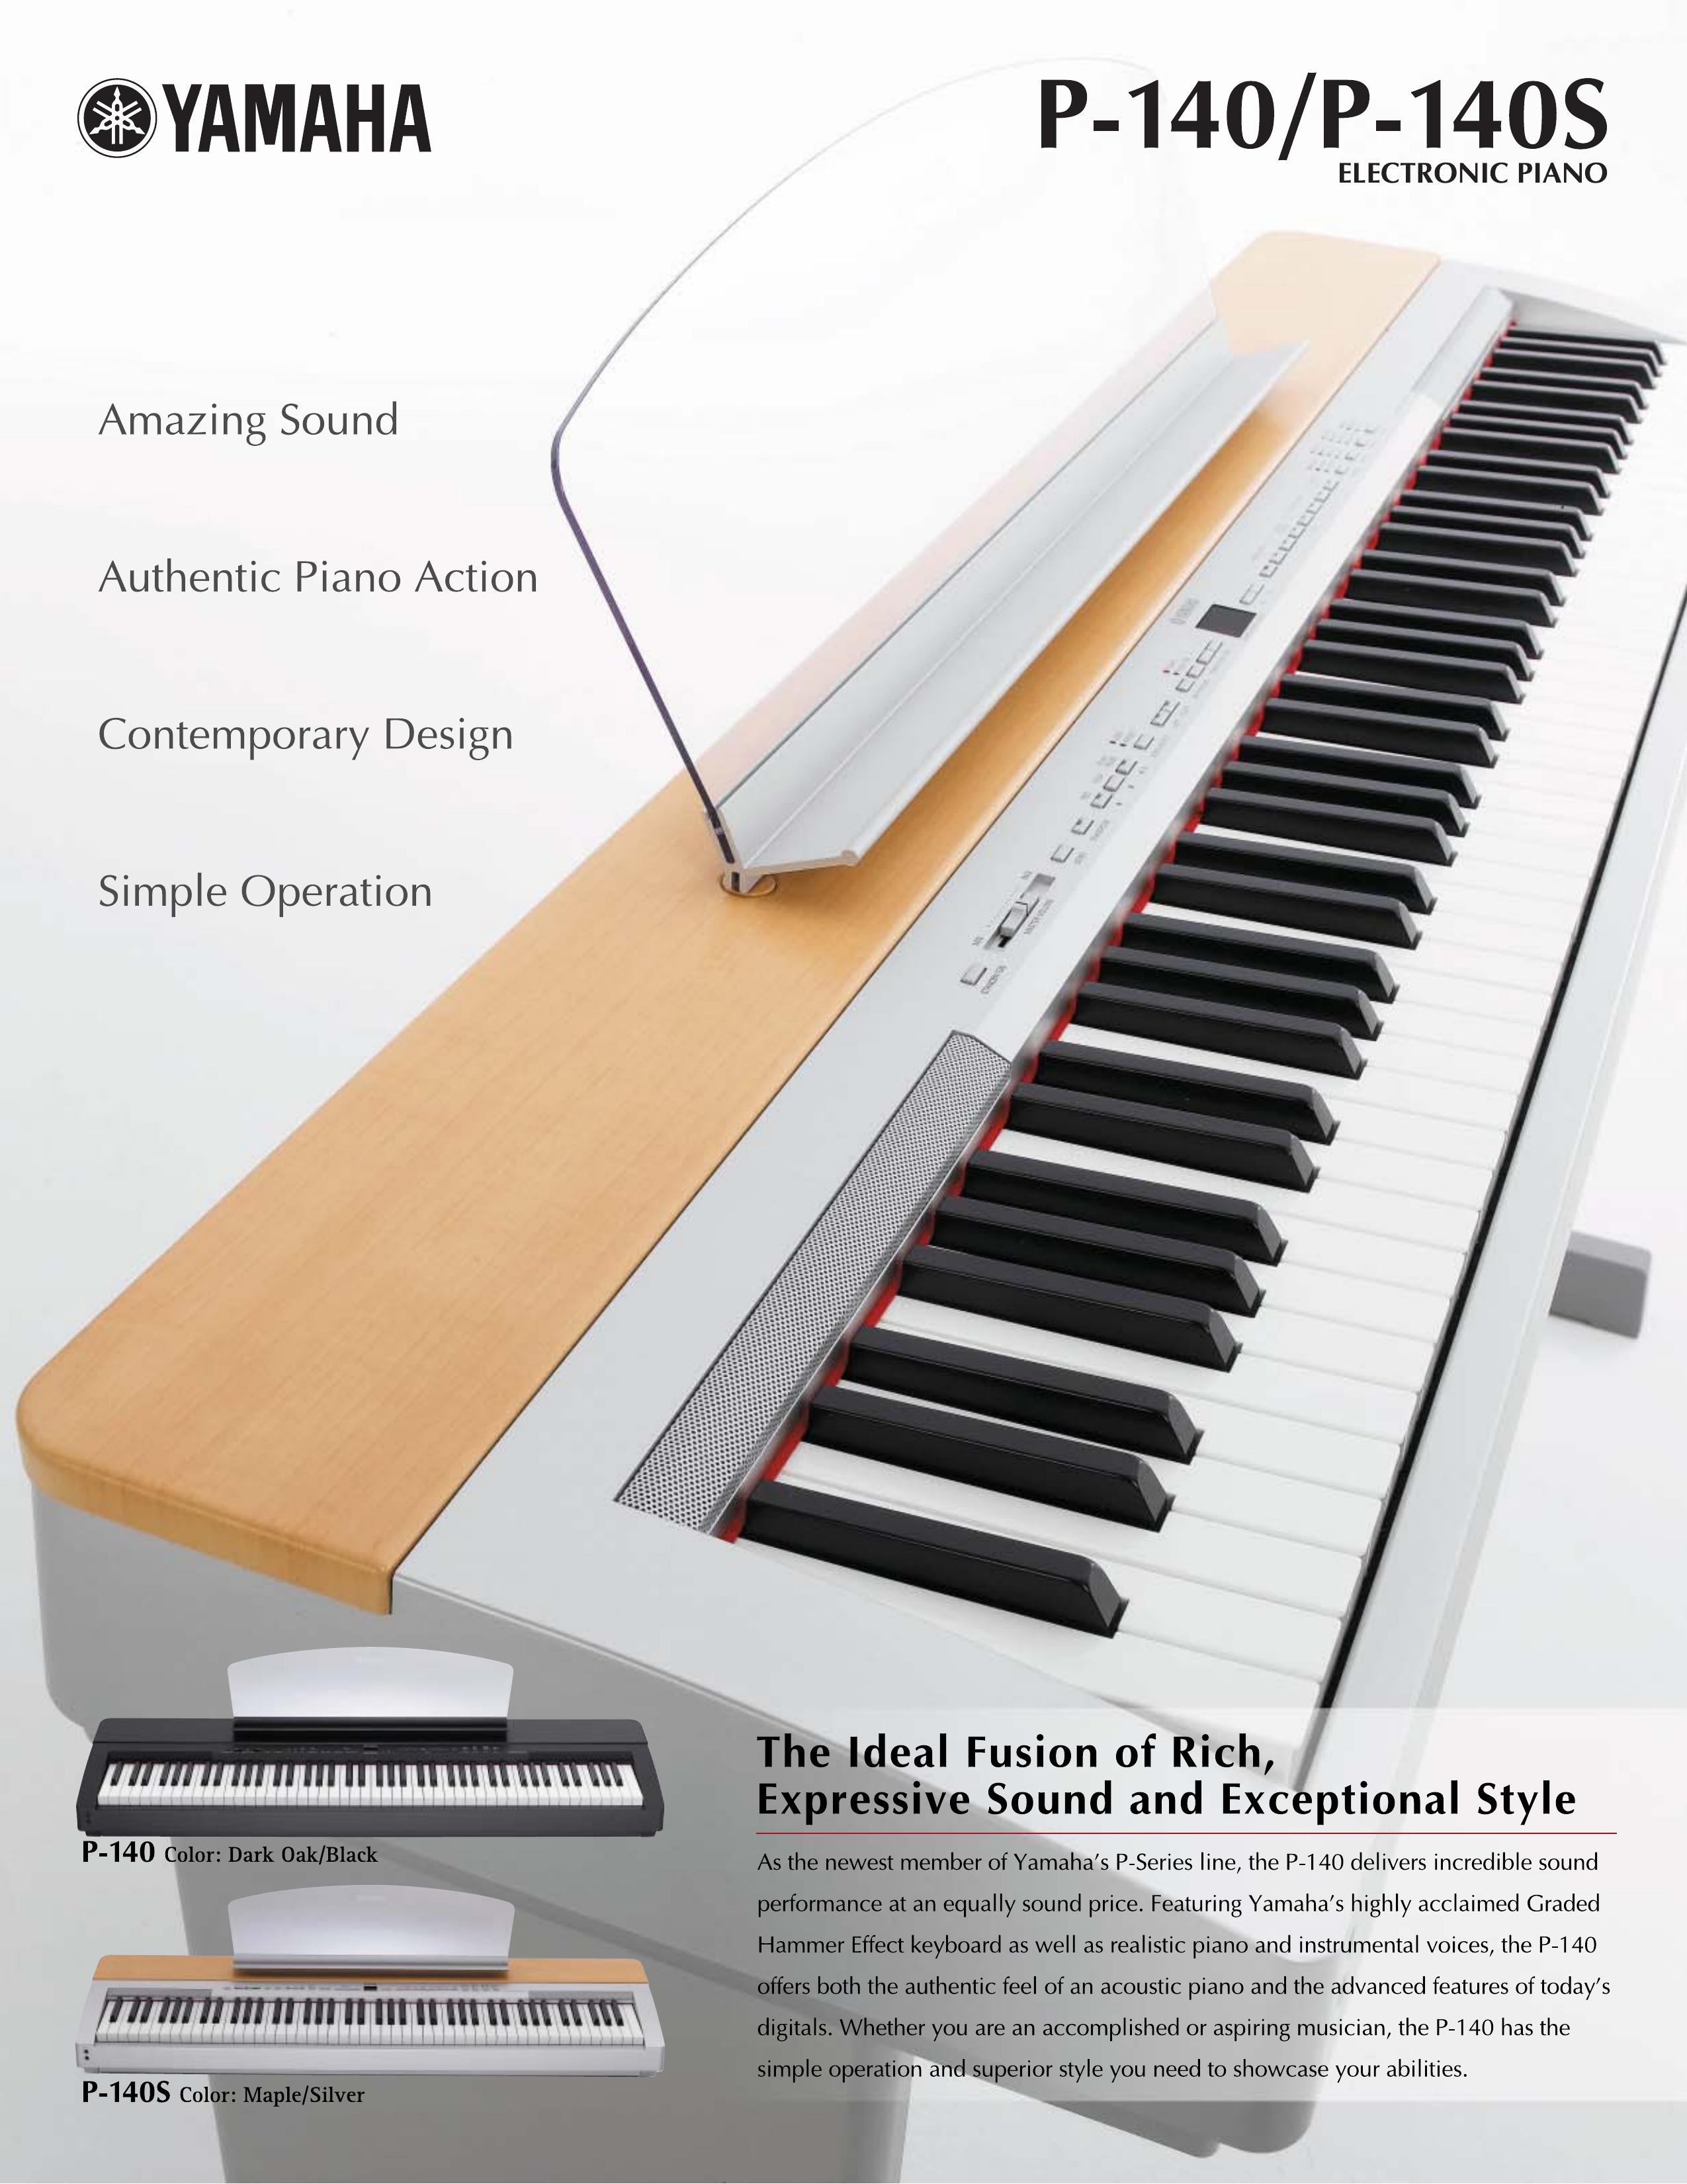 Yamaha Electronic Piano Pill Reminder Device User Manual